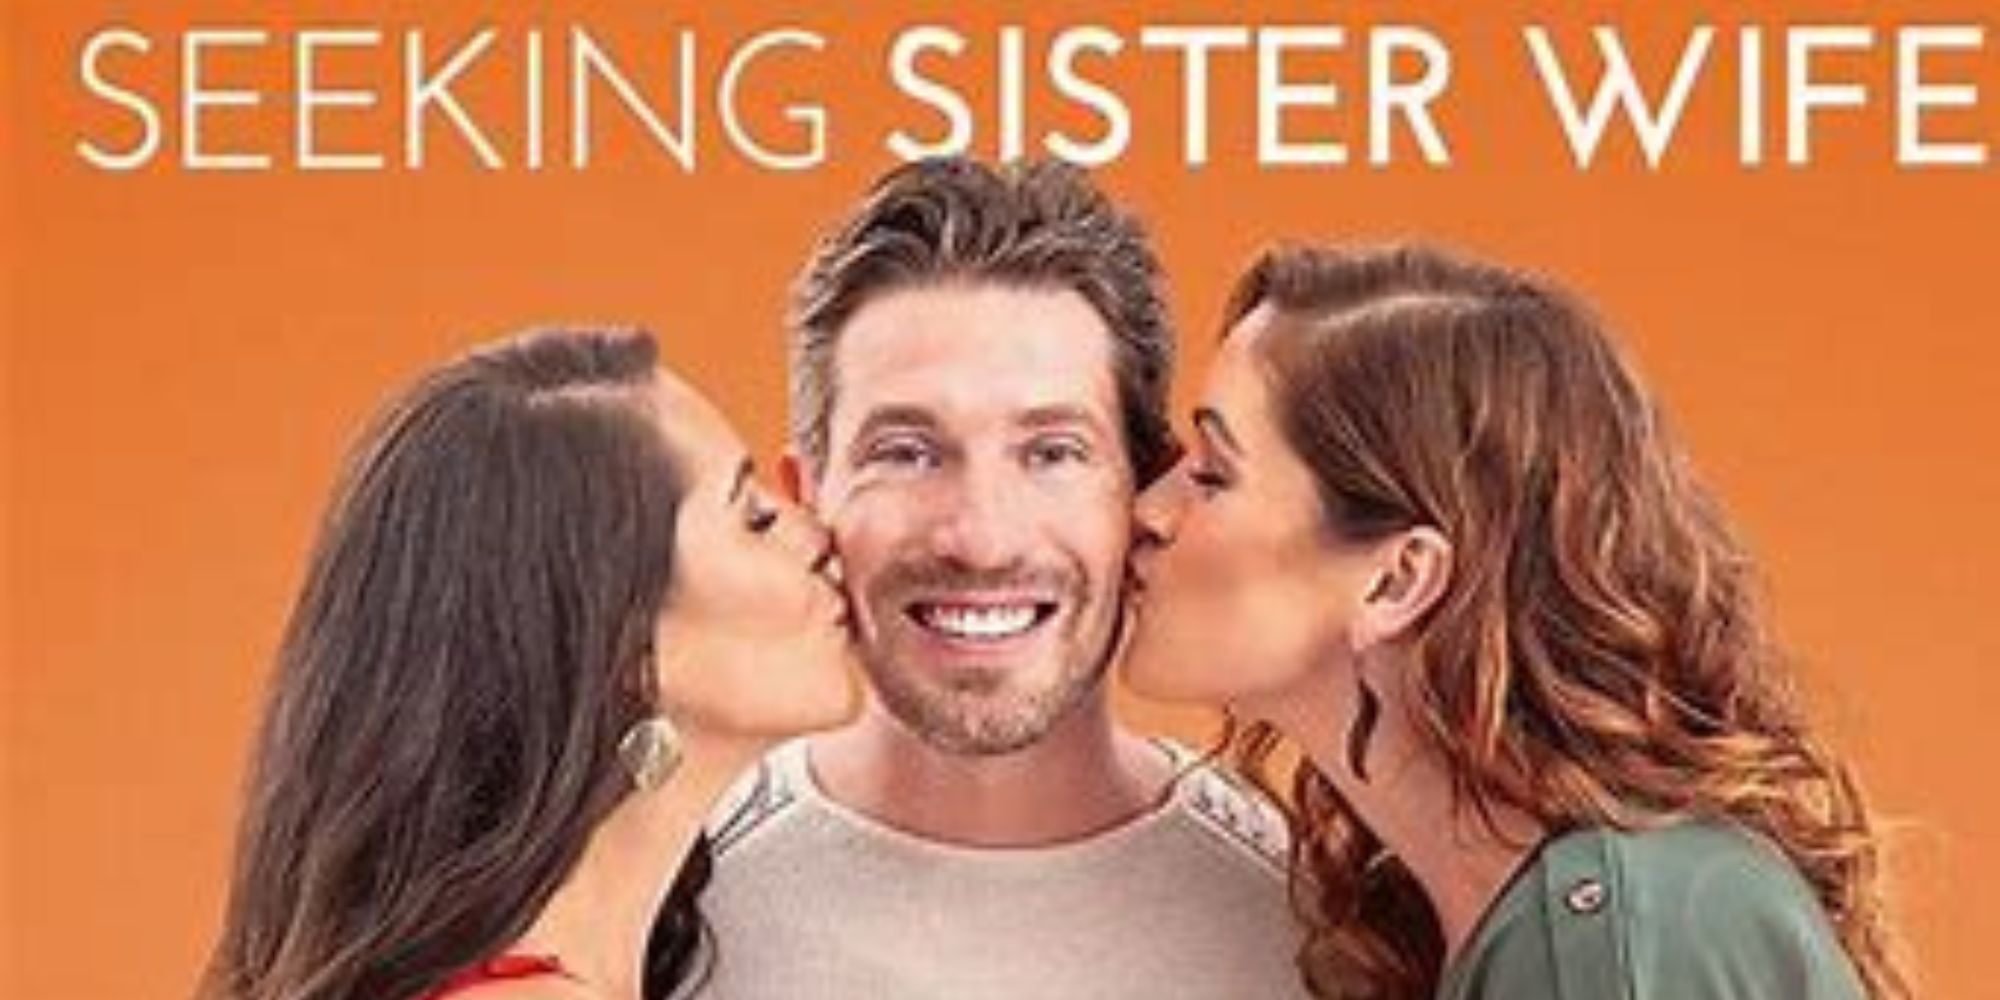 Seeking sister wife promo shot garrick merrifield being kissed by Danielle and roberta